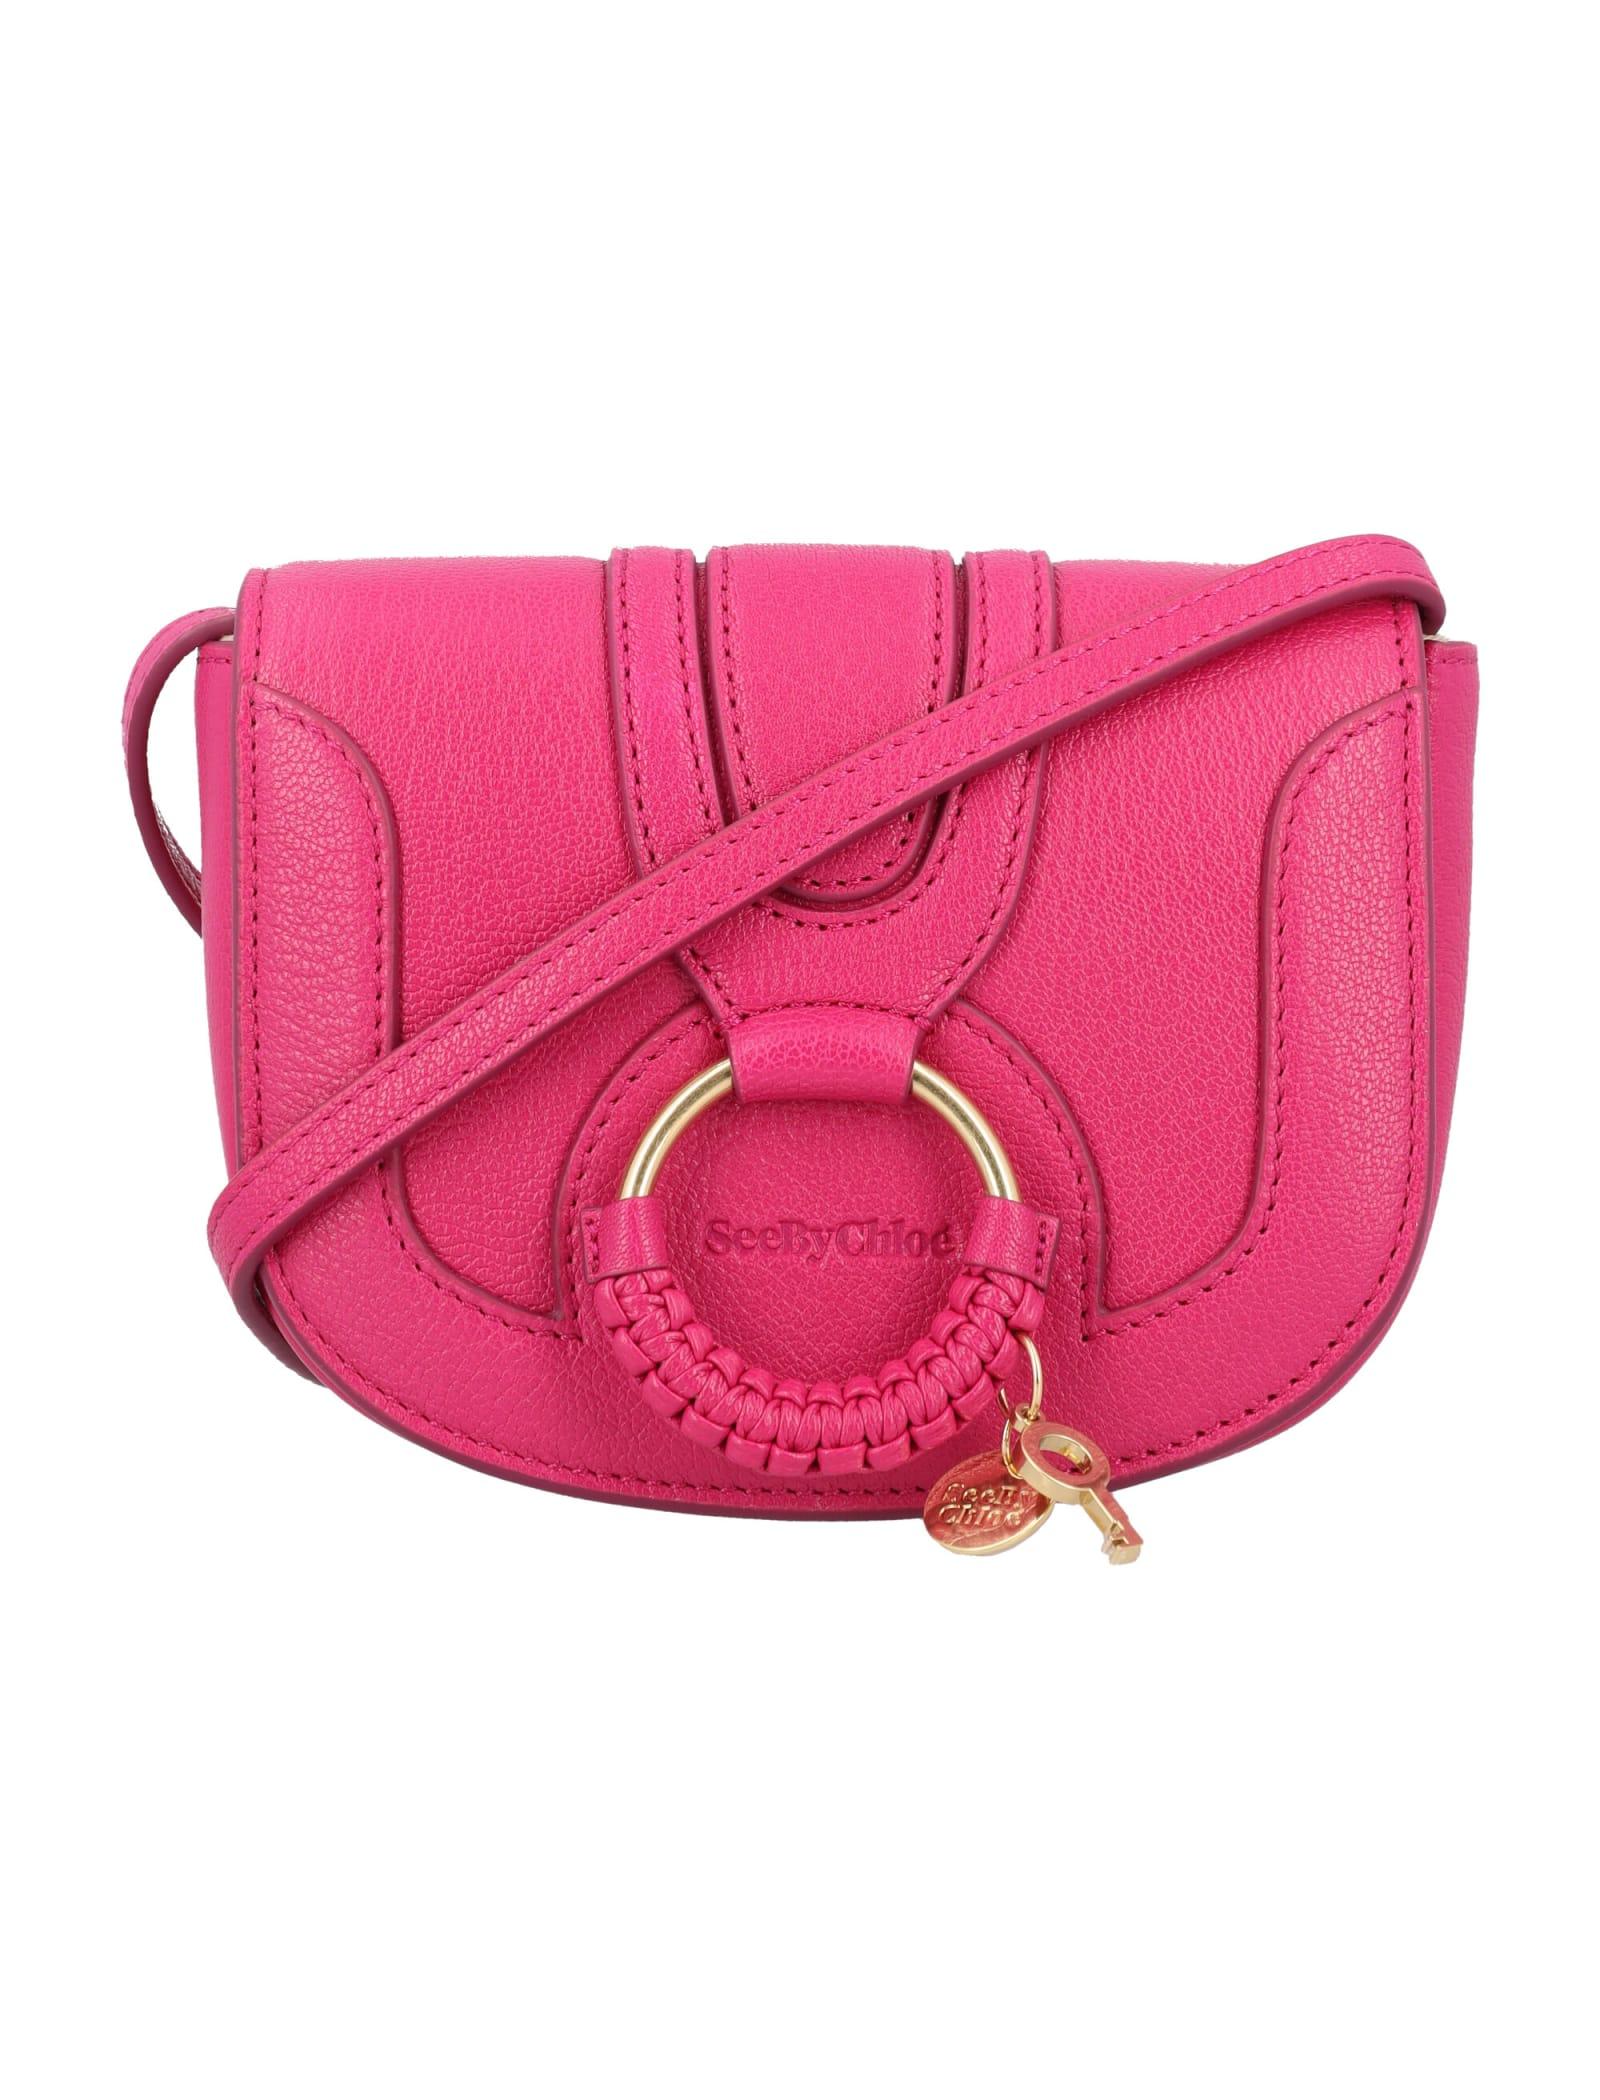 See By Chloé Hana Mini Shoulder Bag in Pink | Lyst